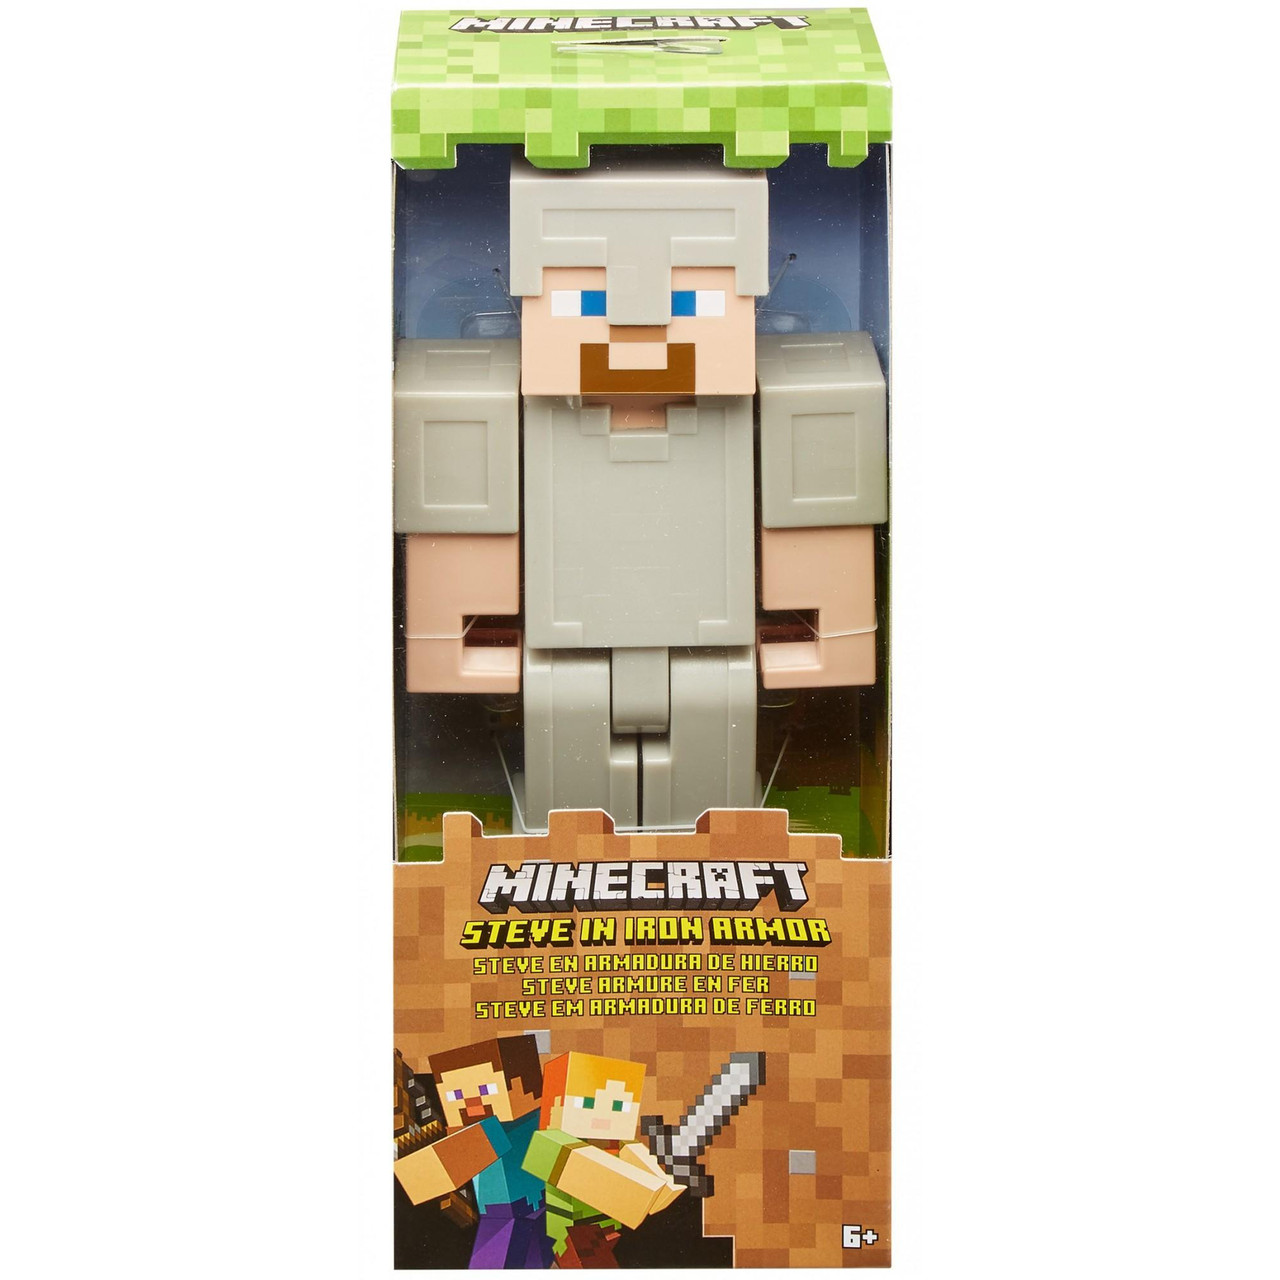 Funko POP! Games: Minecraft - Steve Collectible Figure